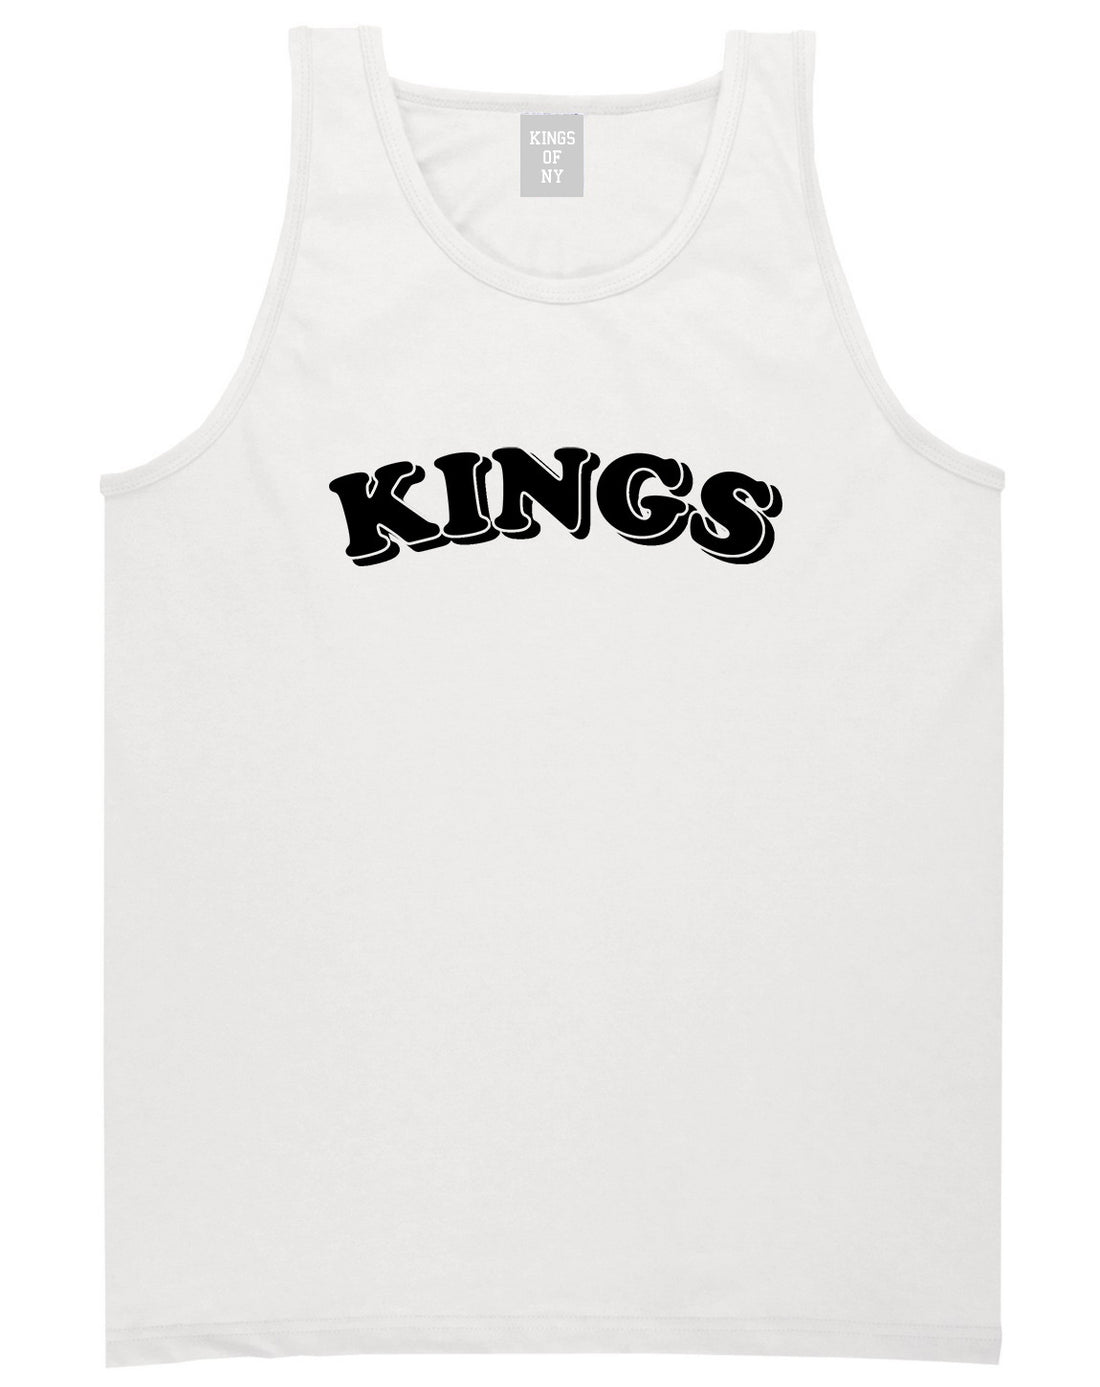 KINGS Bubble Letters Tank Top in White